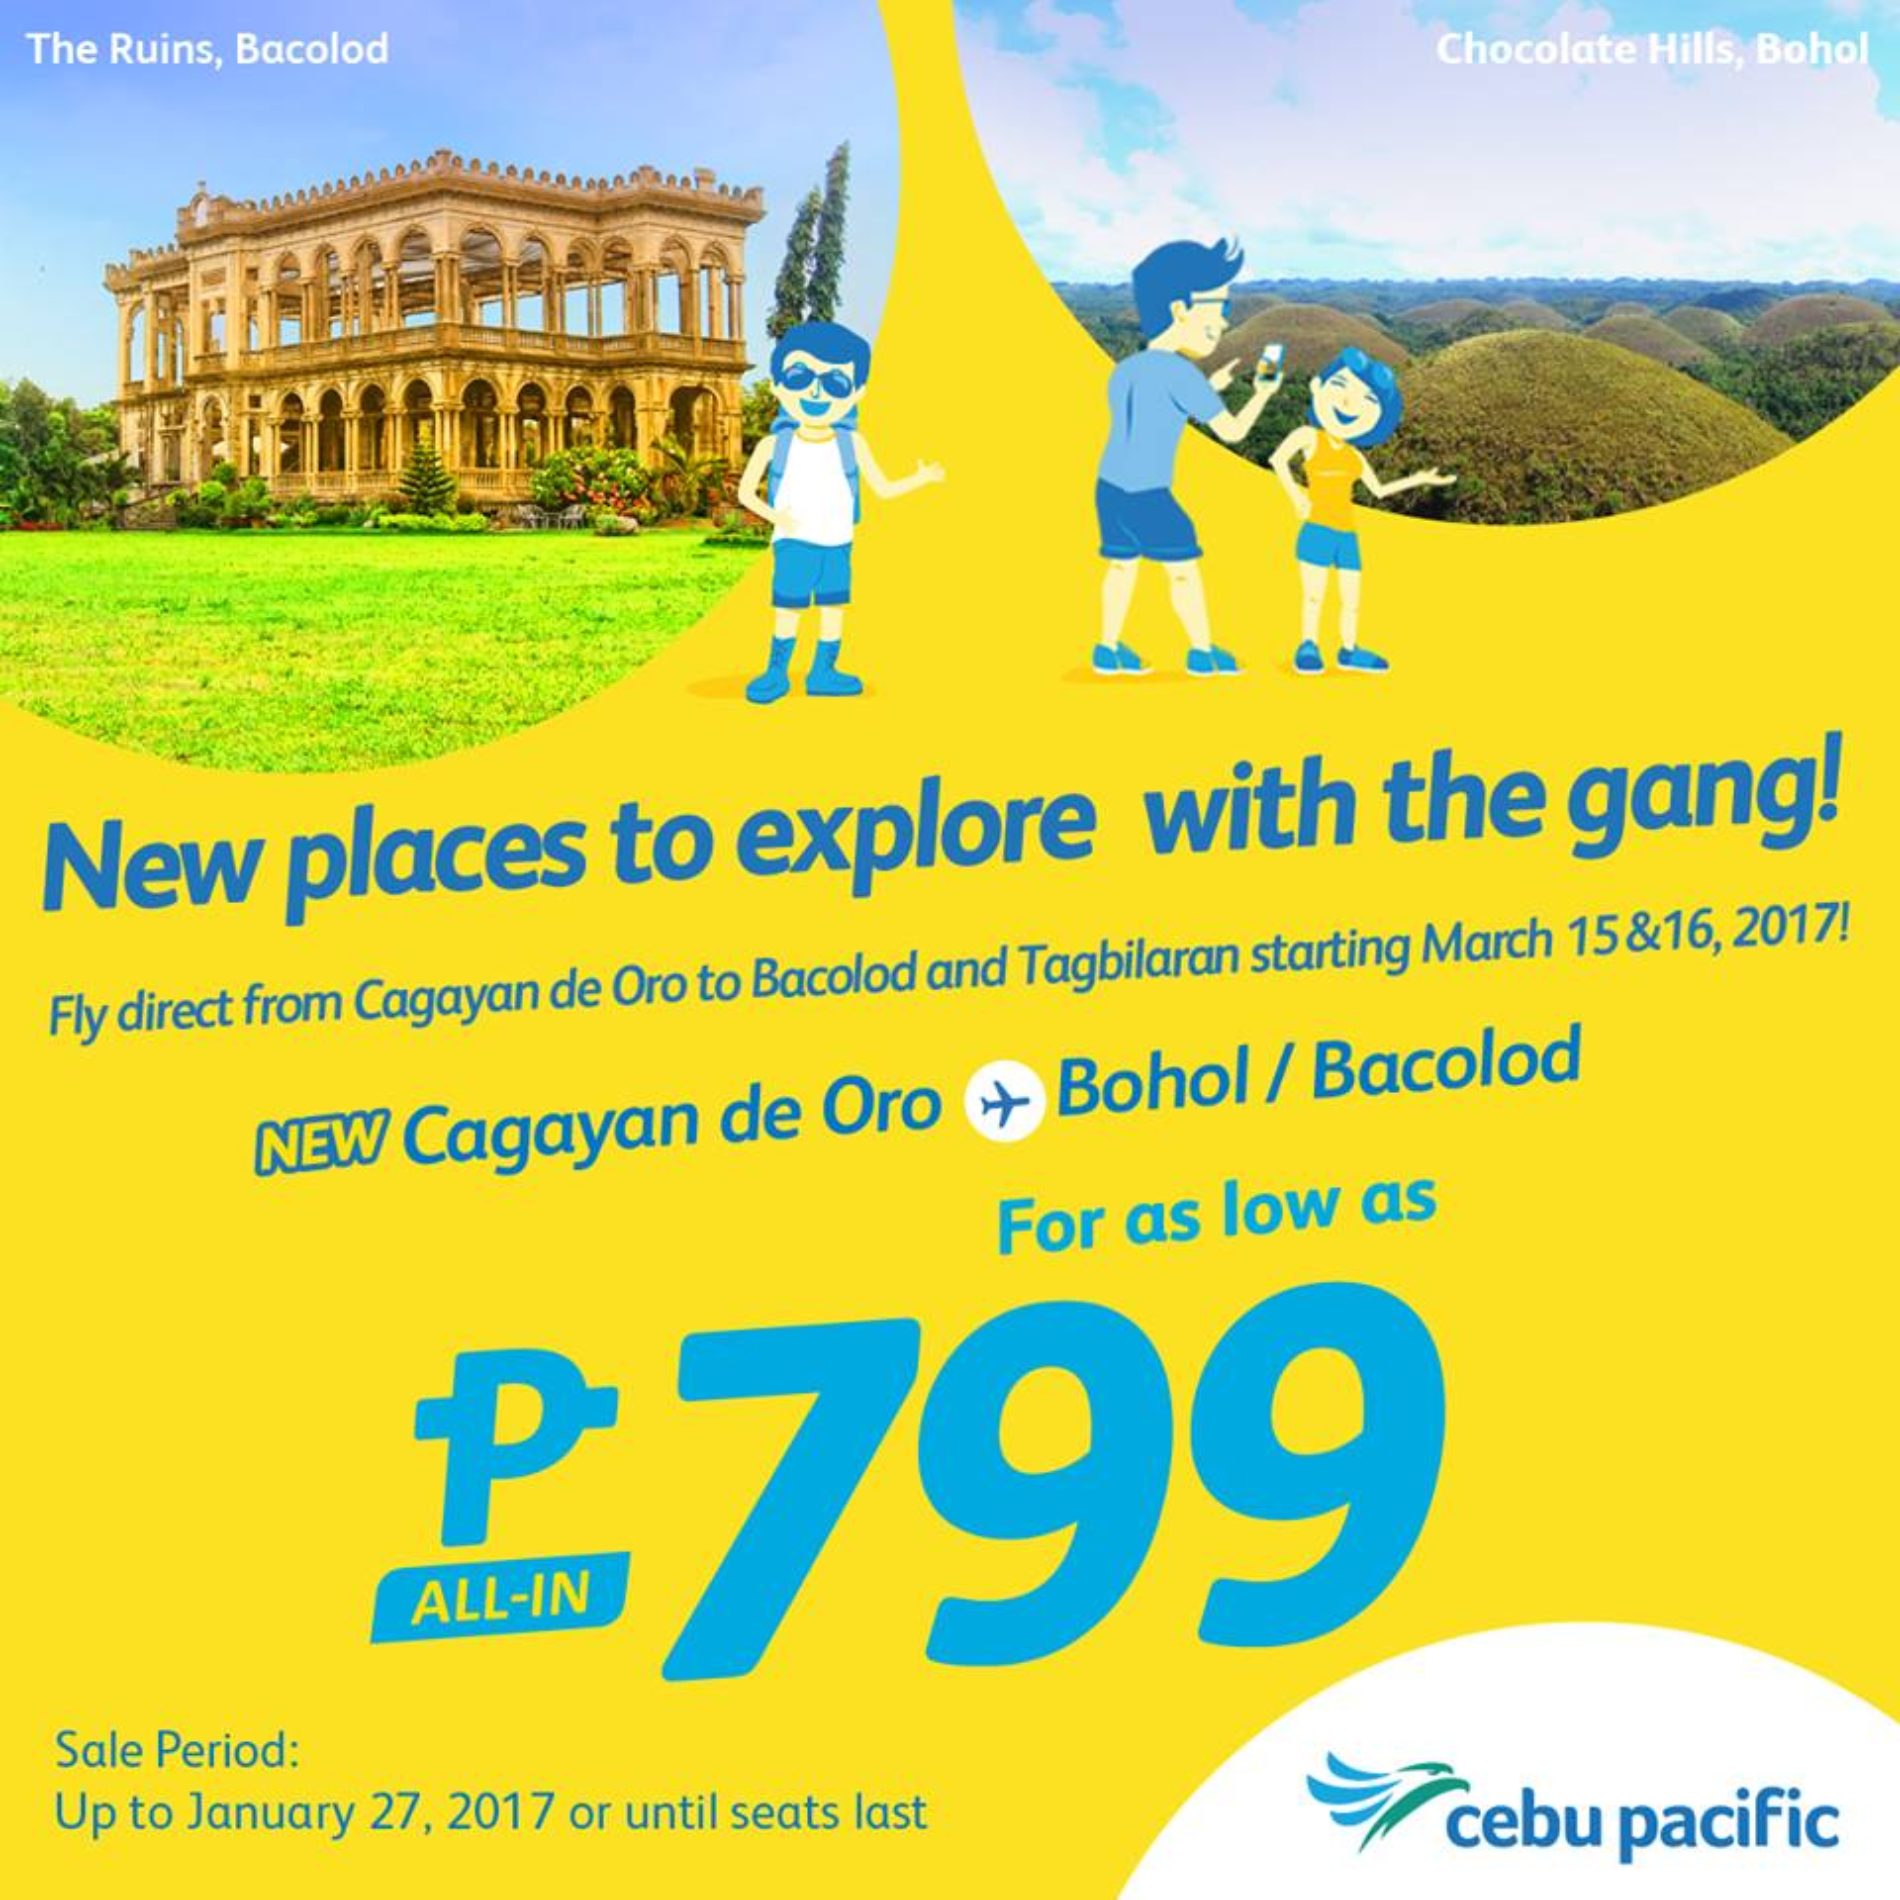 Cebu Pacific Promo SALE PERIOD: UP TO JUL 13, 2017